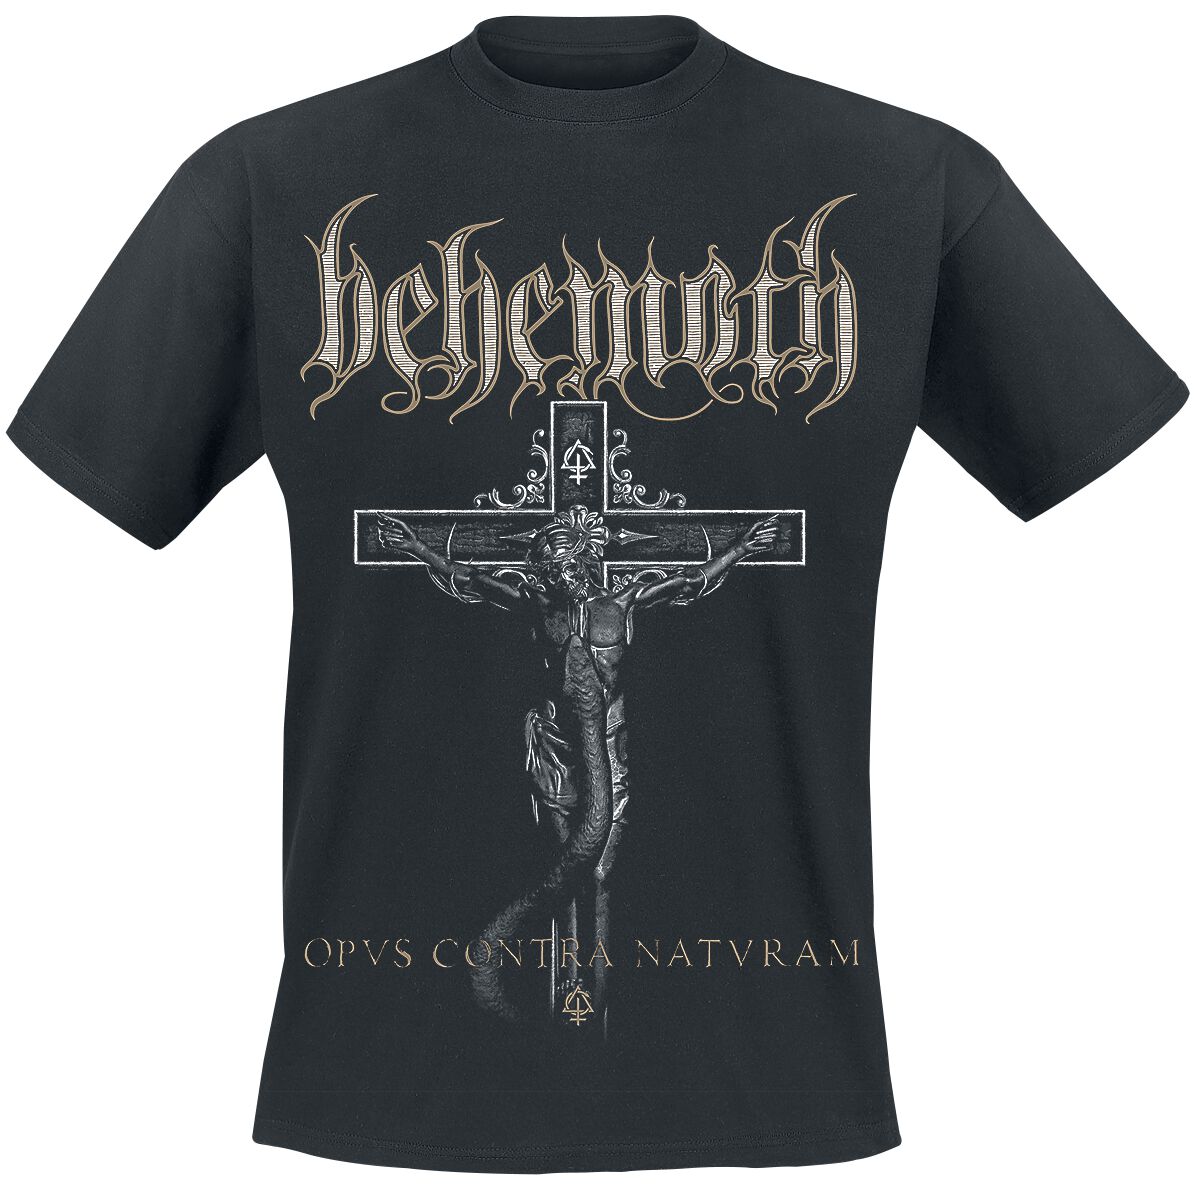 behemoth t-shirt - ocn cross - s bis xxl - fÃ¼r mÃ¤nner - grÃ¶ÃŸe s - - emp exklusives merchandise! schwarz